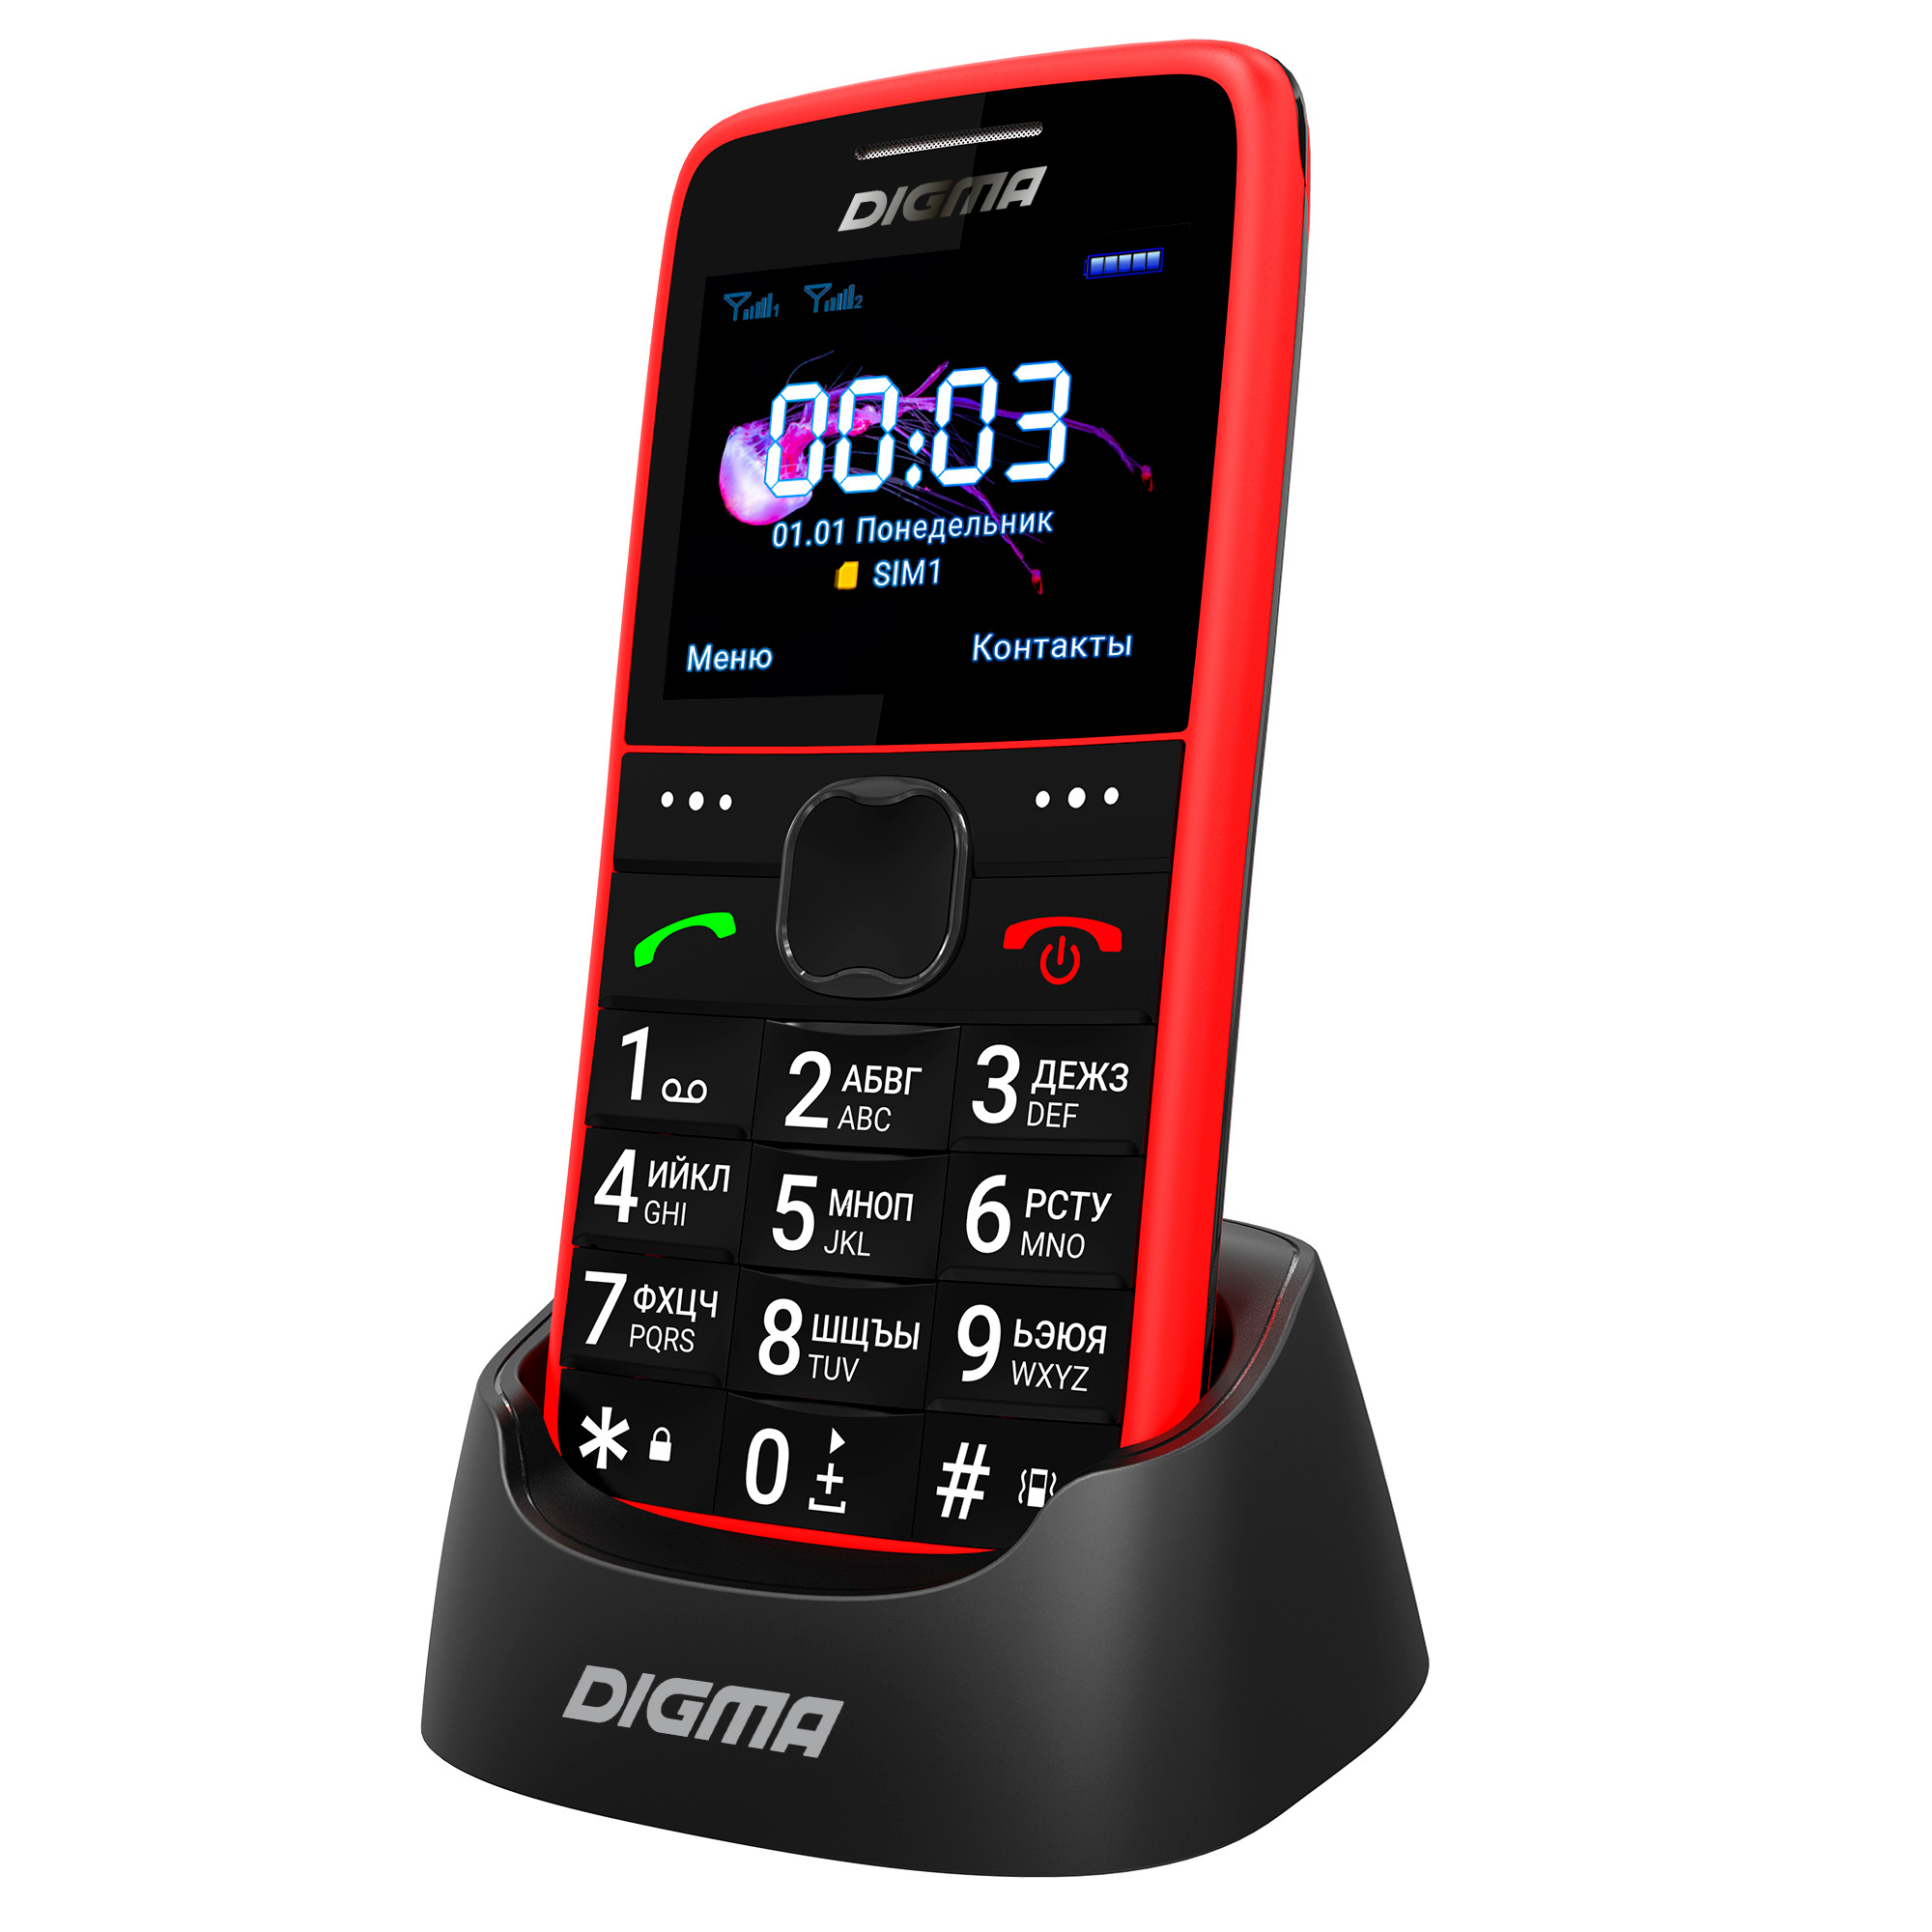 Мобильный телефон Digma S220 Linx 32Mb красный моноблок 2Sim 2.2" 176x220 0.3Mpix GSM900/1800 MP3 FM microSD max32Gb